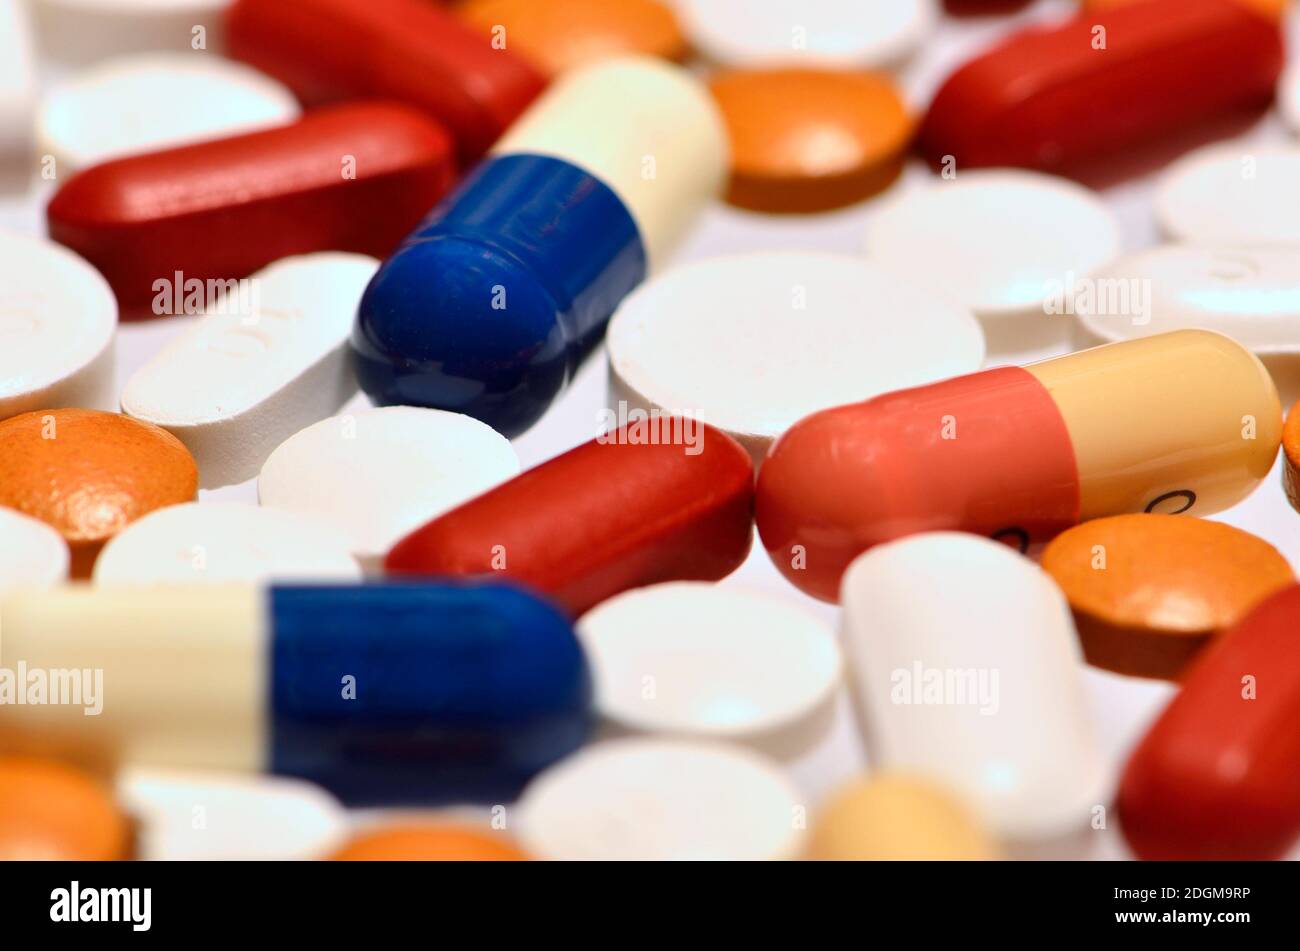 Mixture of prescription drugs: pills, tablets, capsules Stock Photo